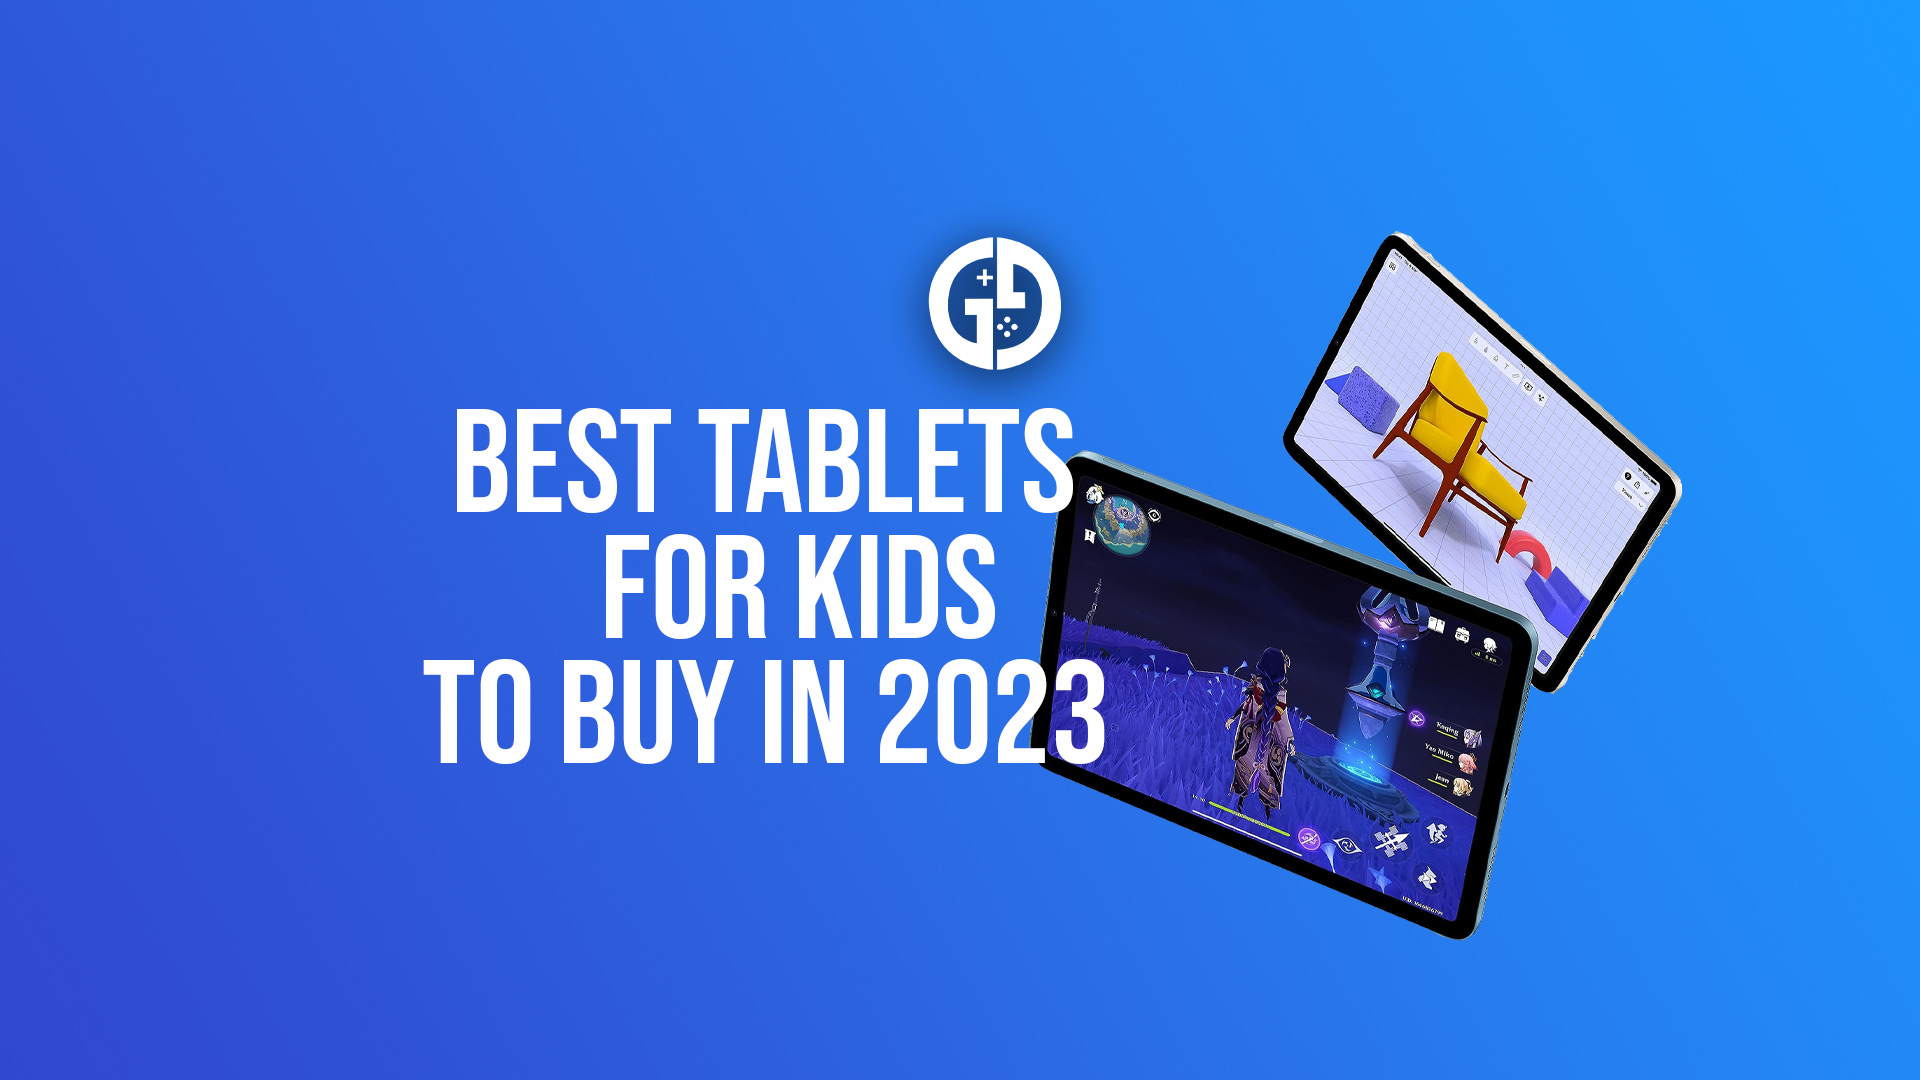 https://www.ggrecon.com/media/ojmdca1o/best-tablets-for-kids-to-buy.jpg